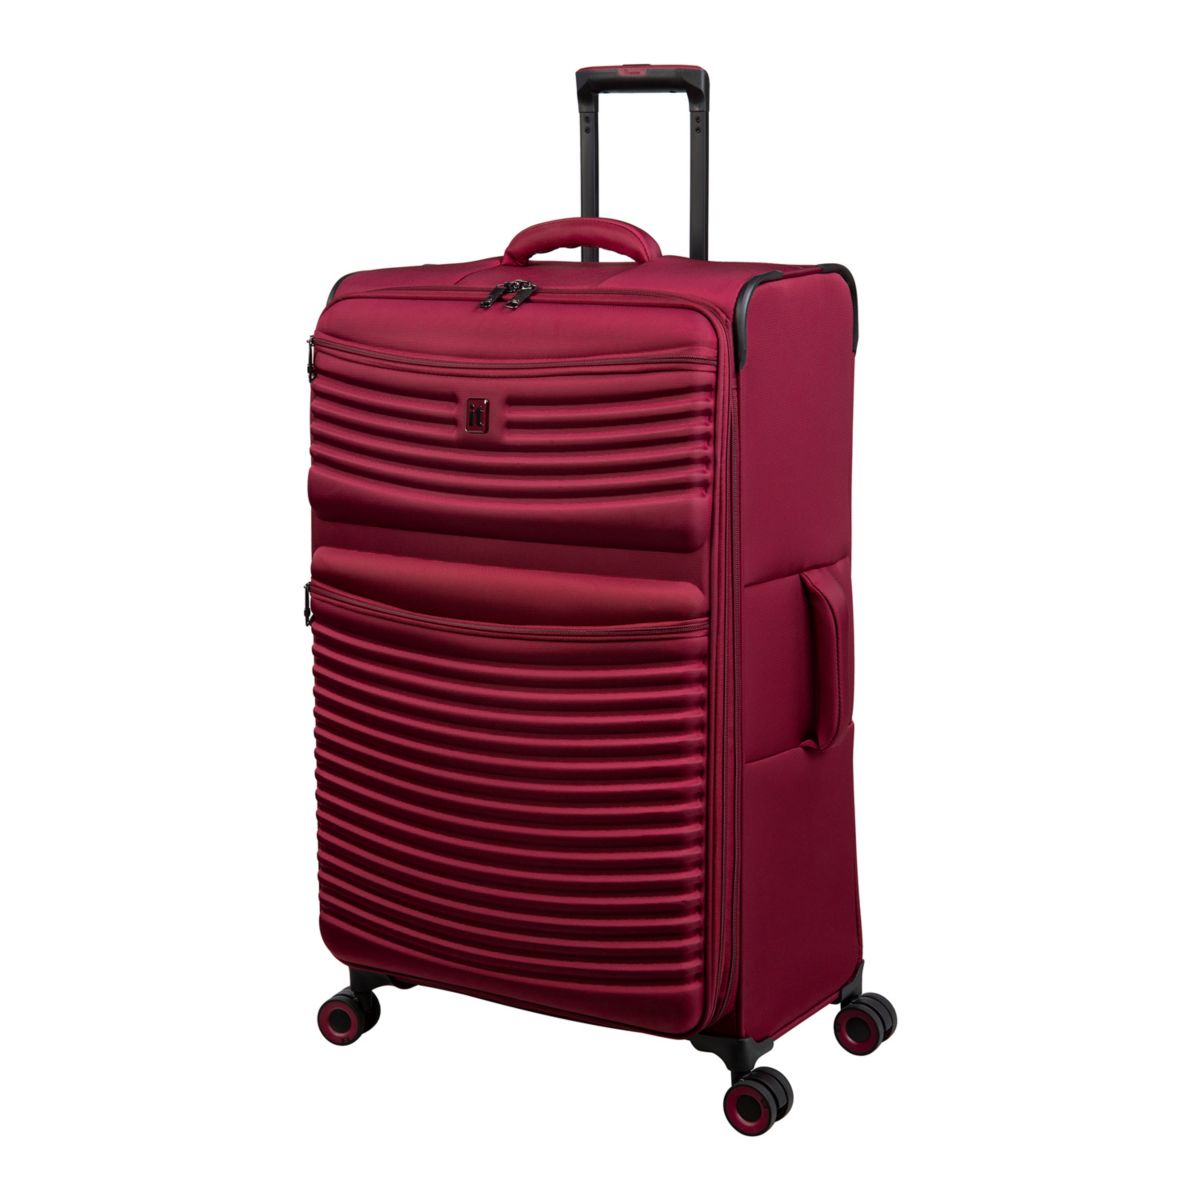 IT-багаж Precursor Softside Spinner Luggage It luggage